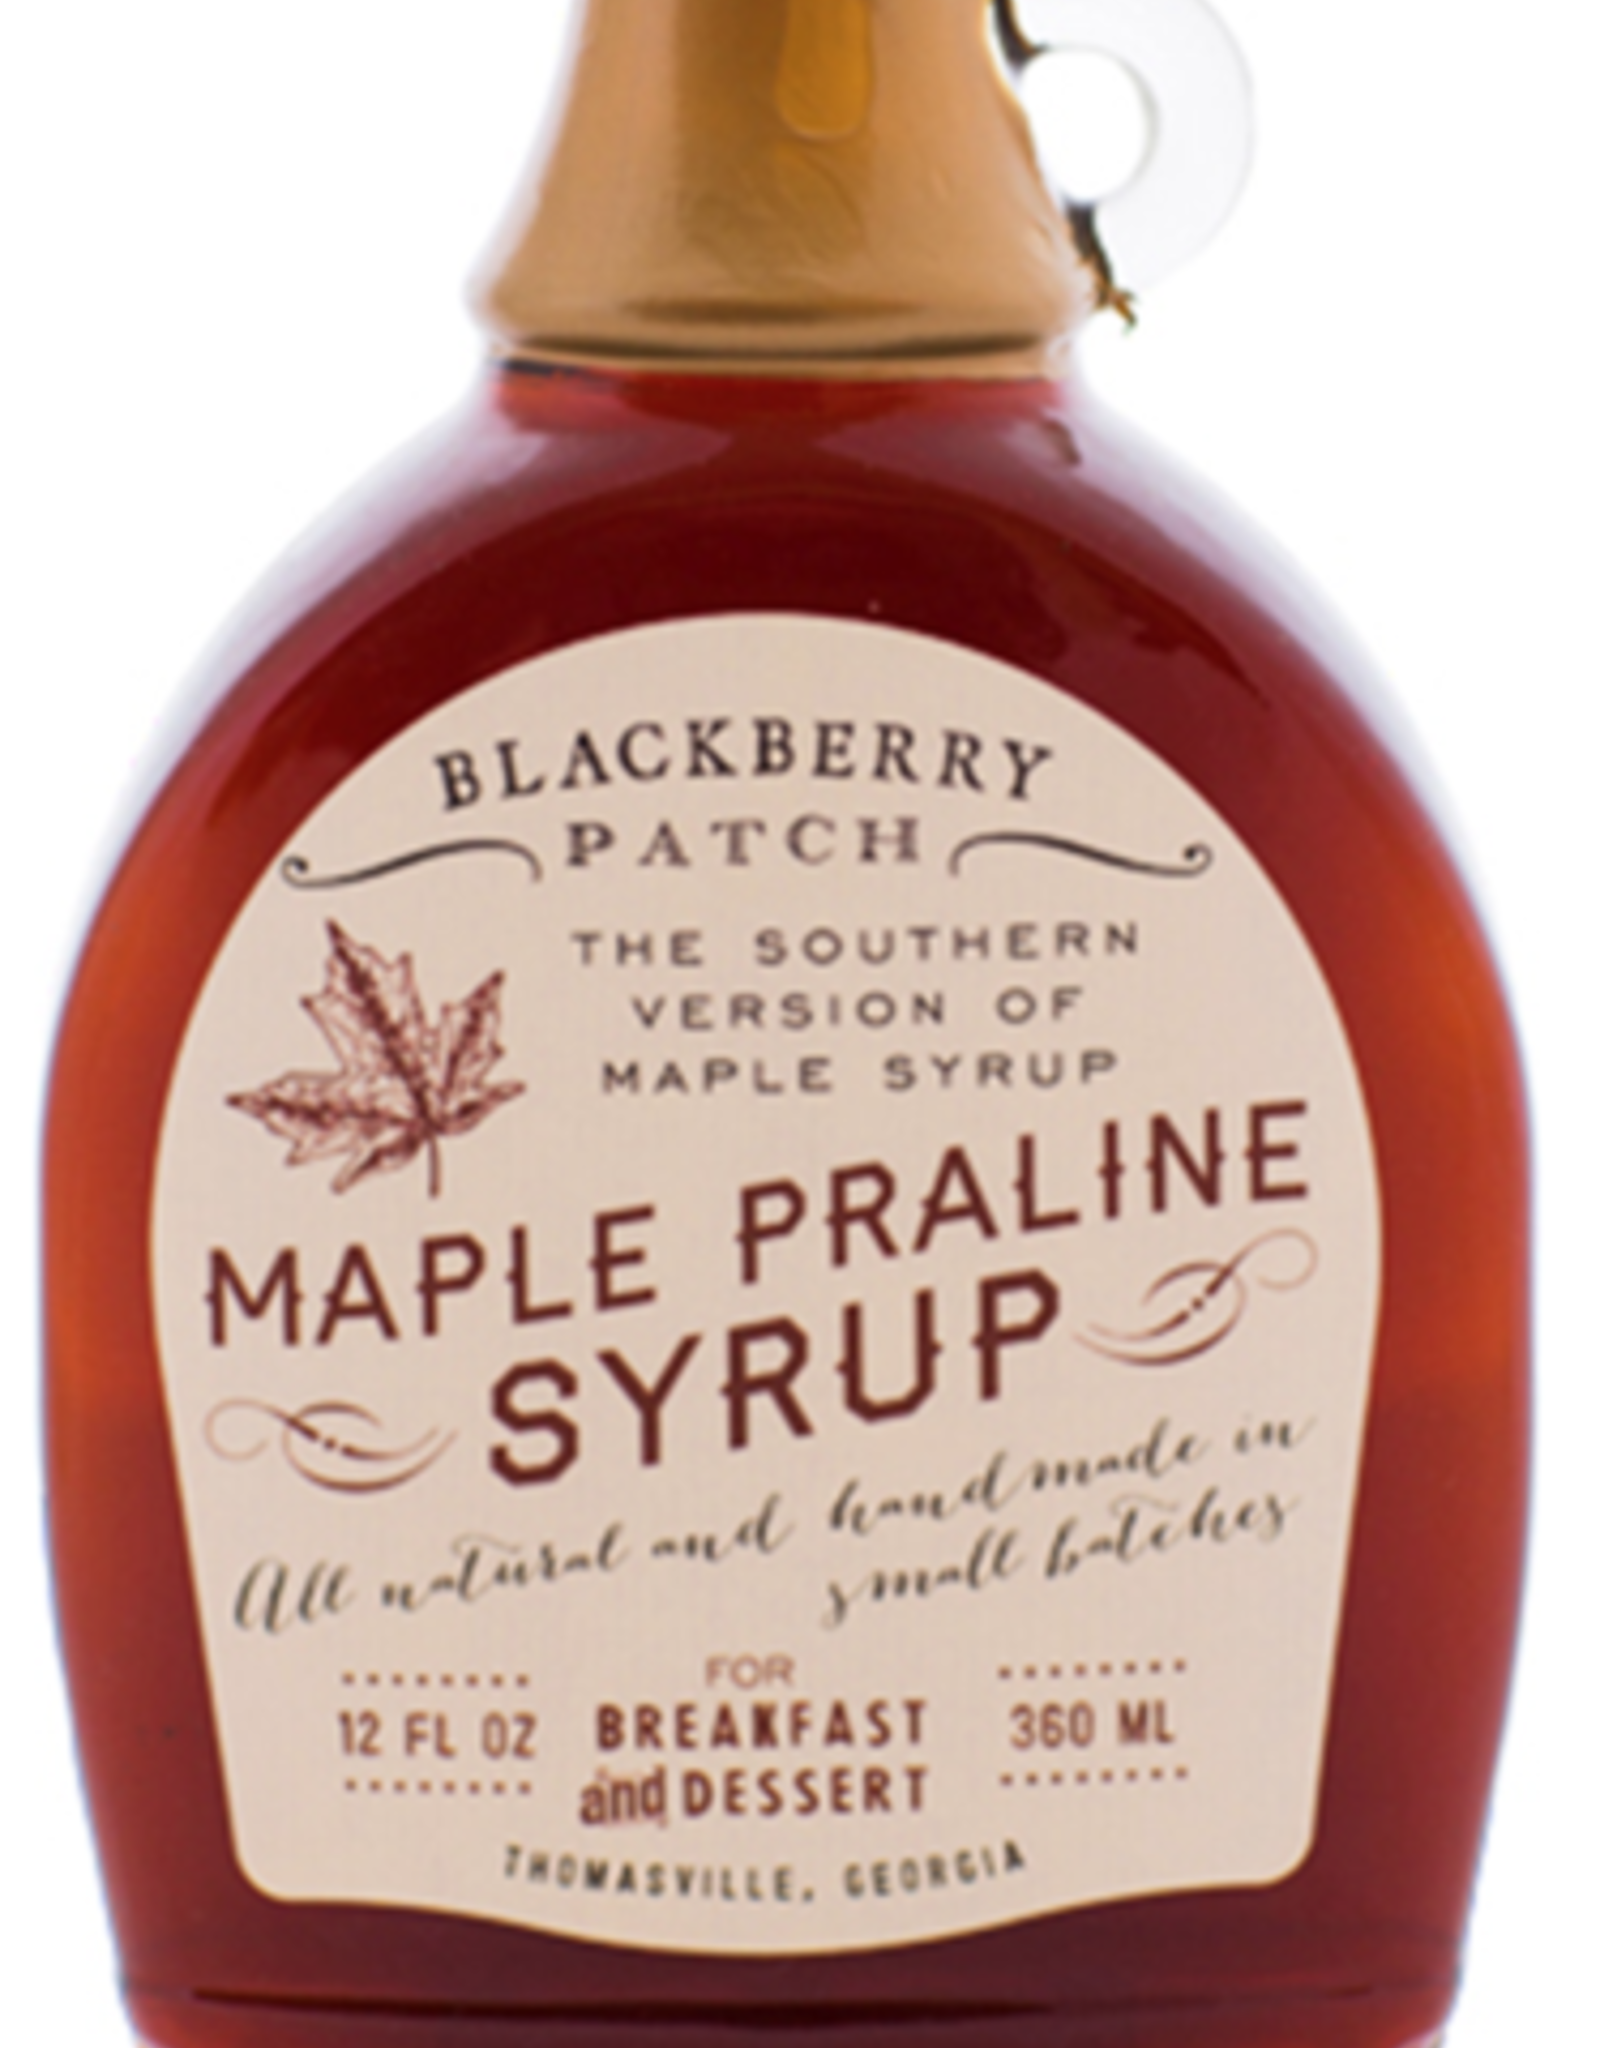 Food & Beverage Blackberry Patch - Maple Praline Syrup